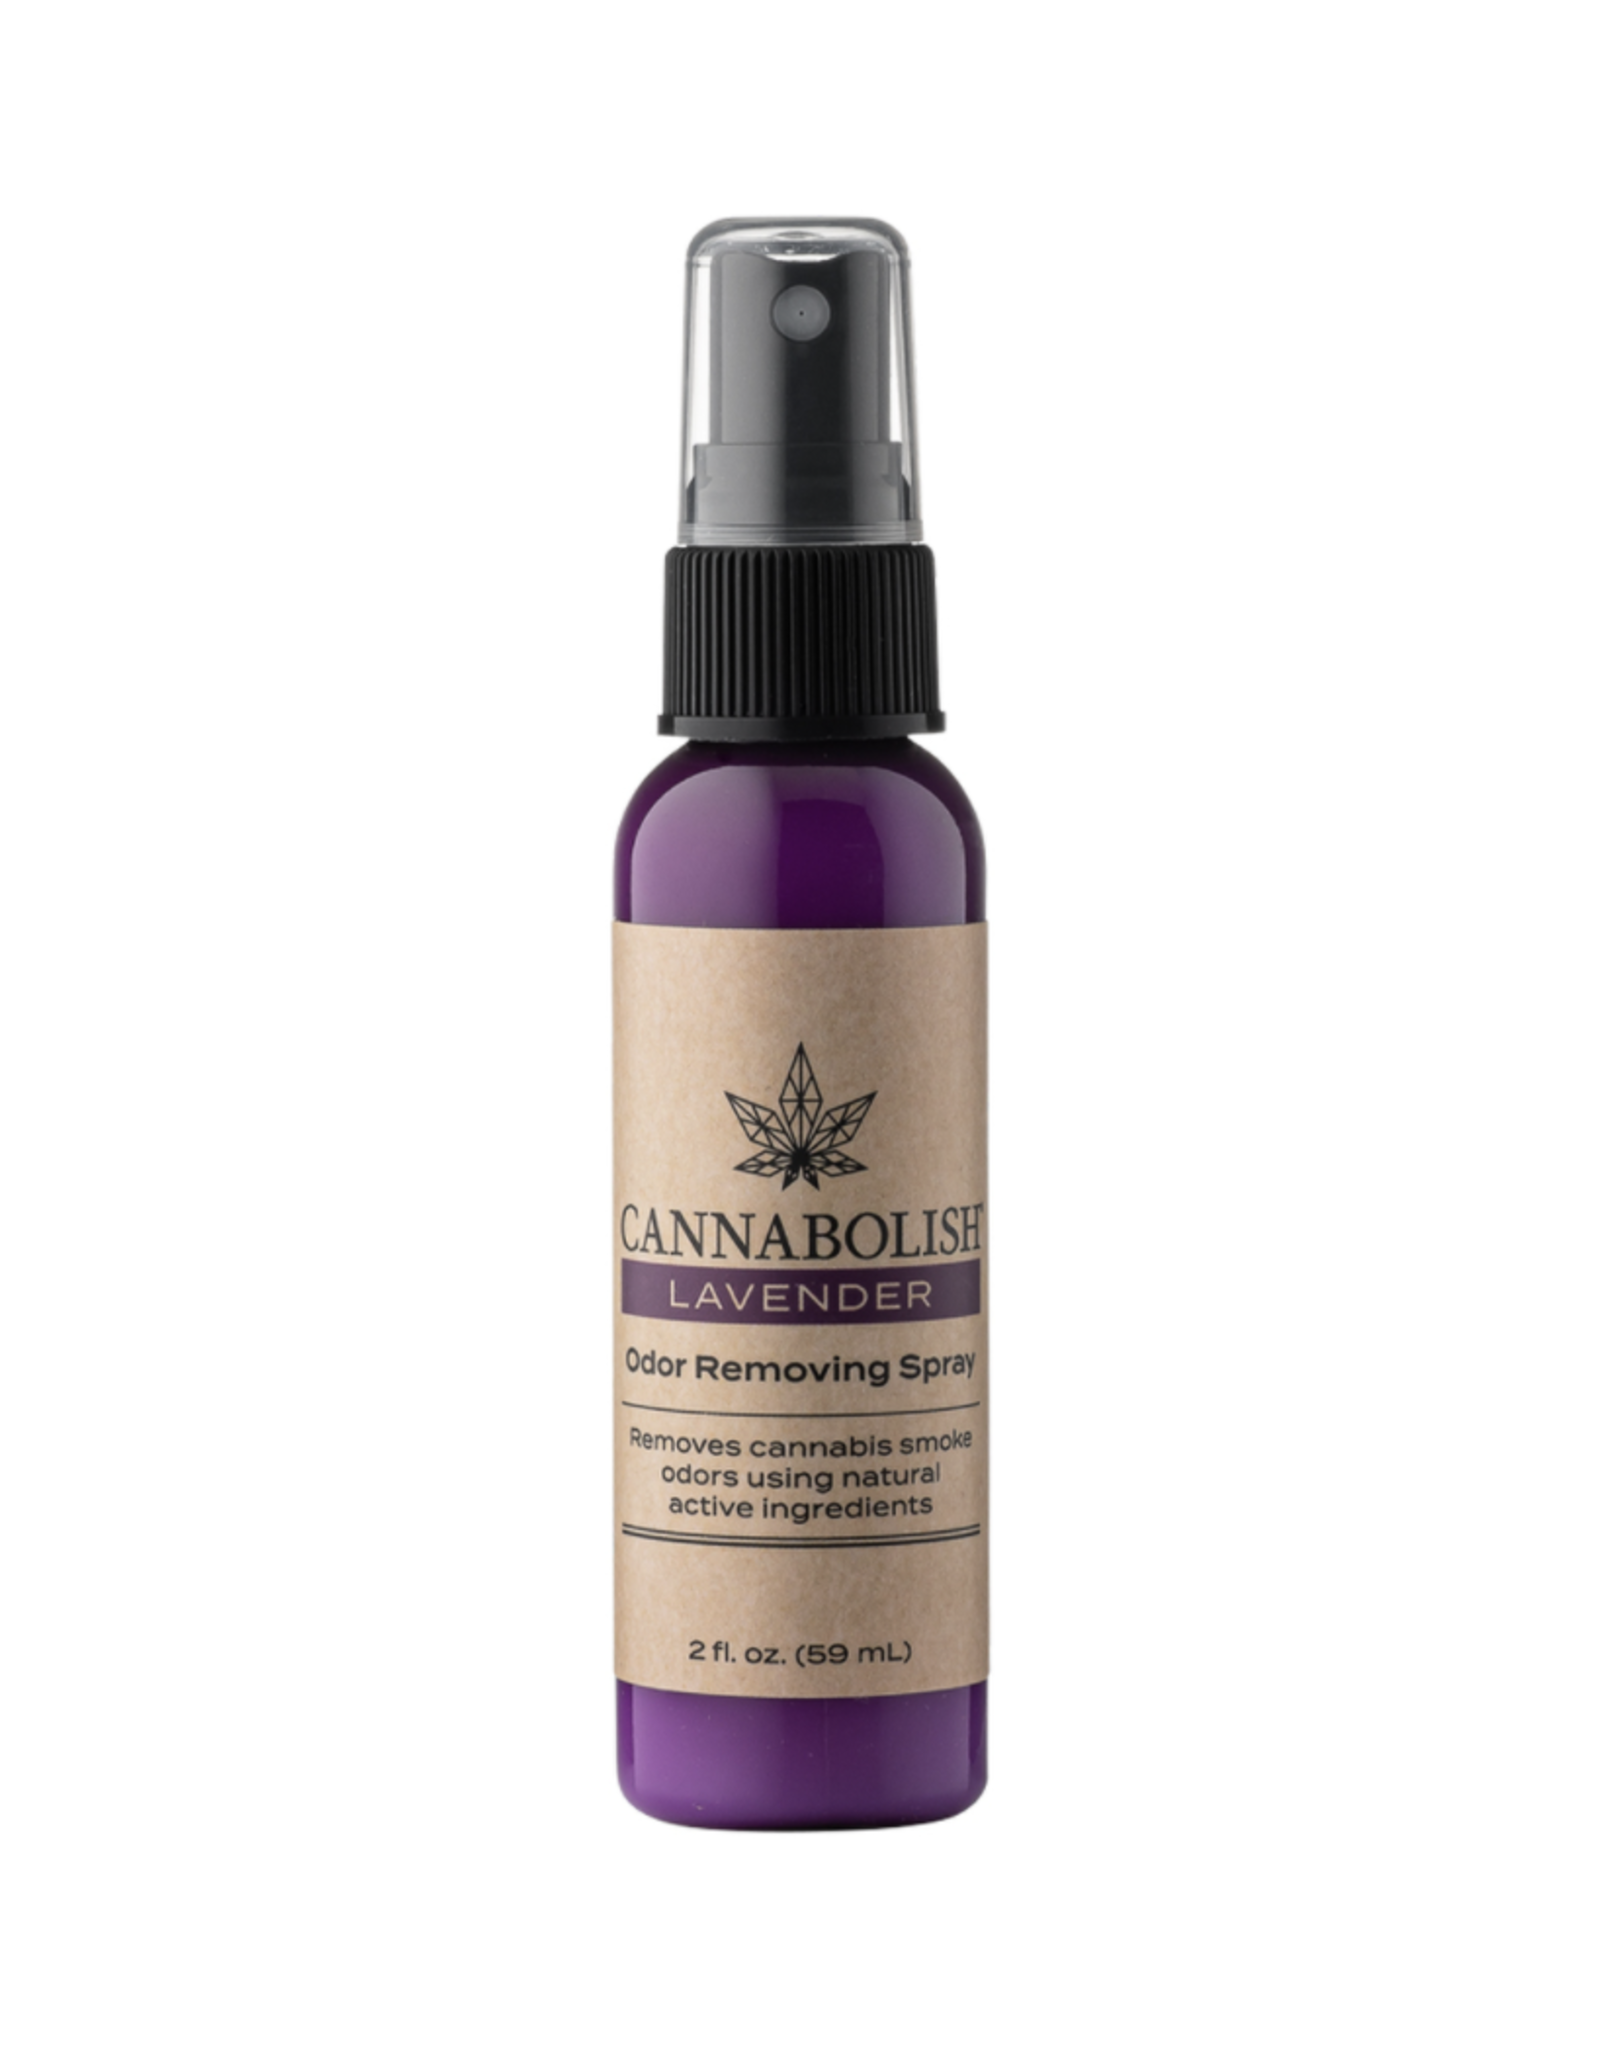 Cannabolish Lavender Spray